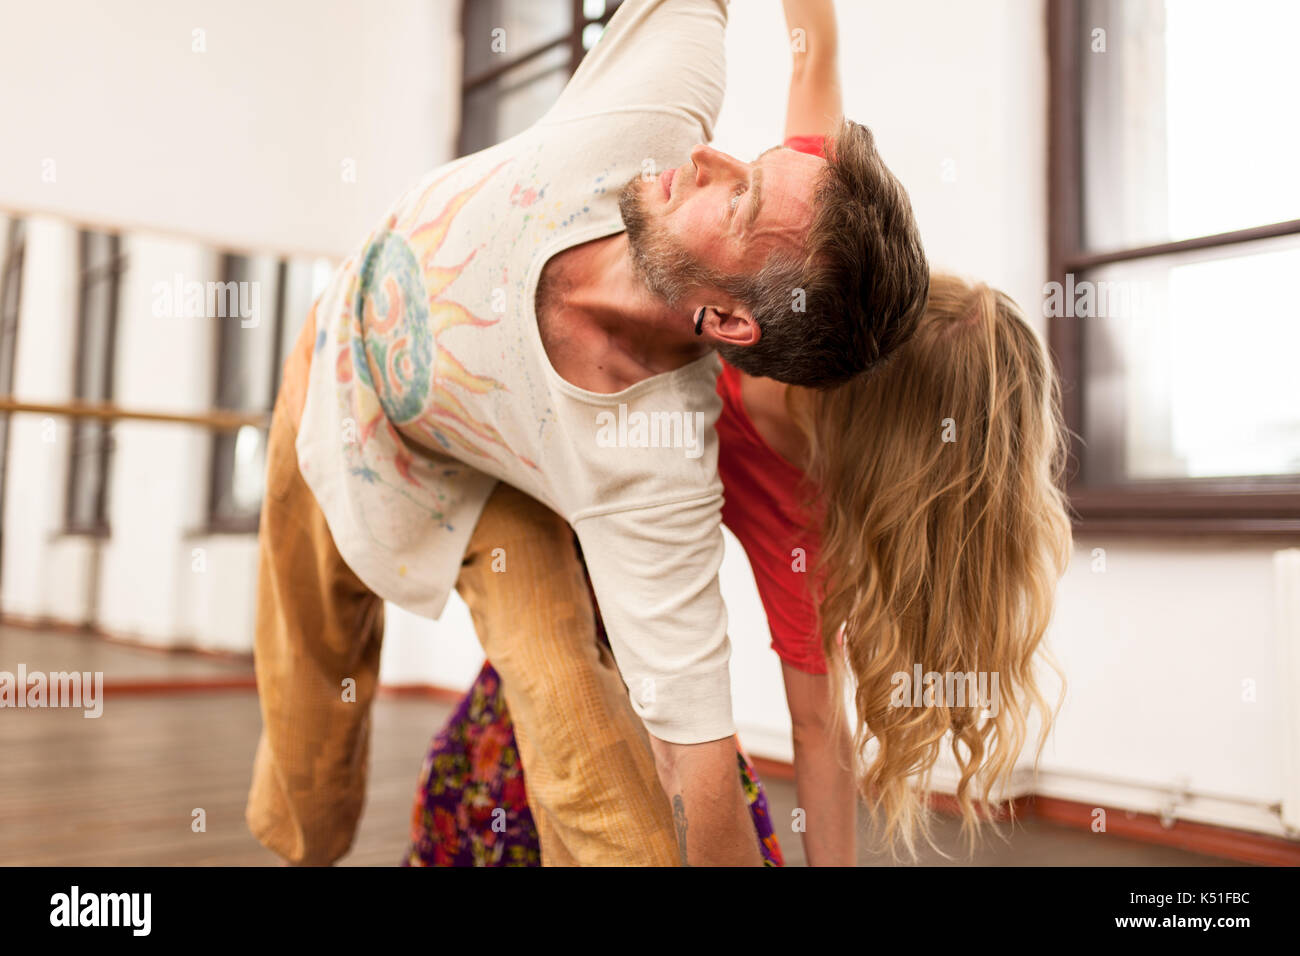 Man and woman practicing partner yoga Stock Photo